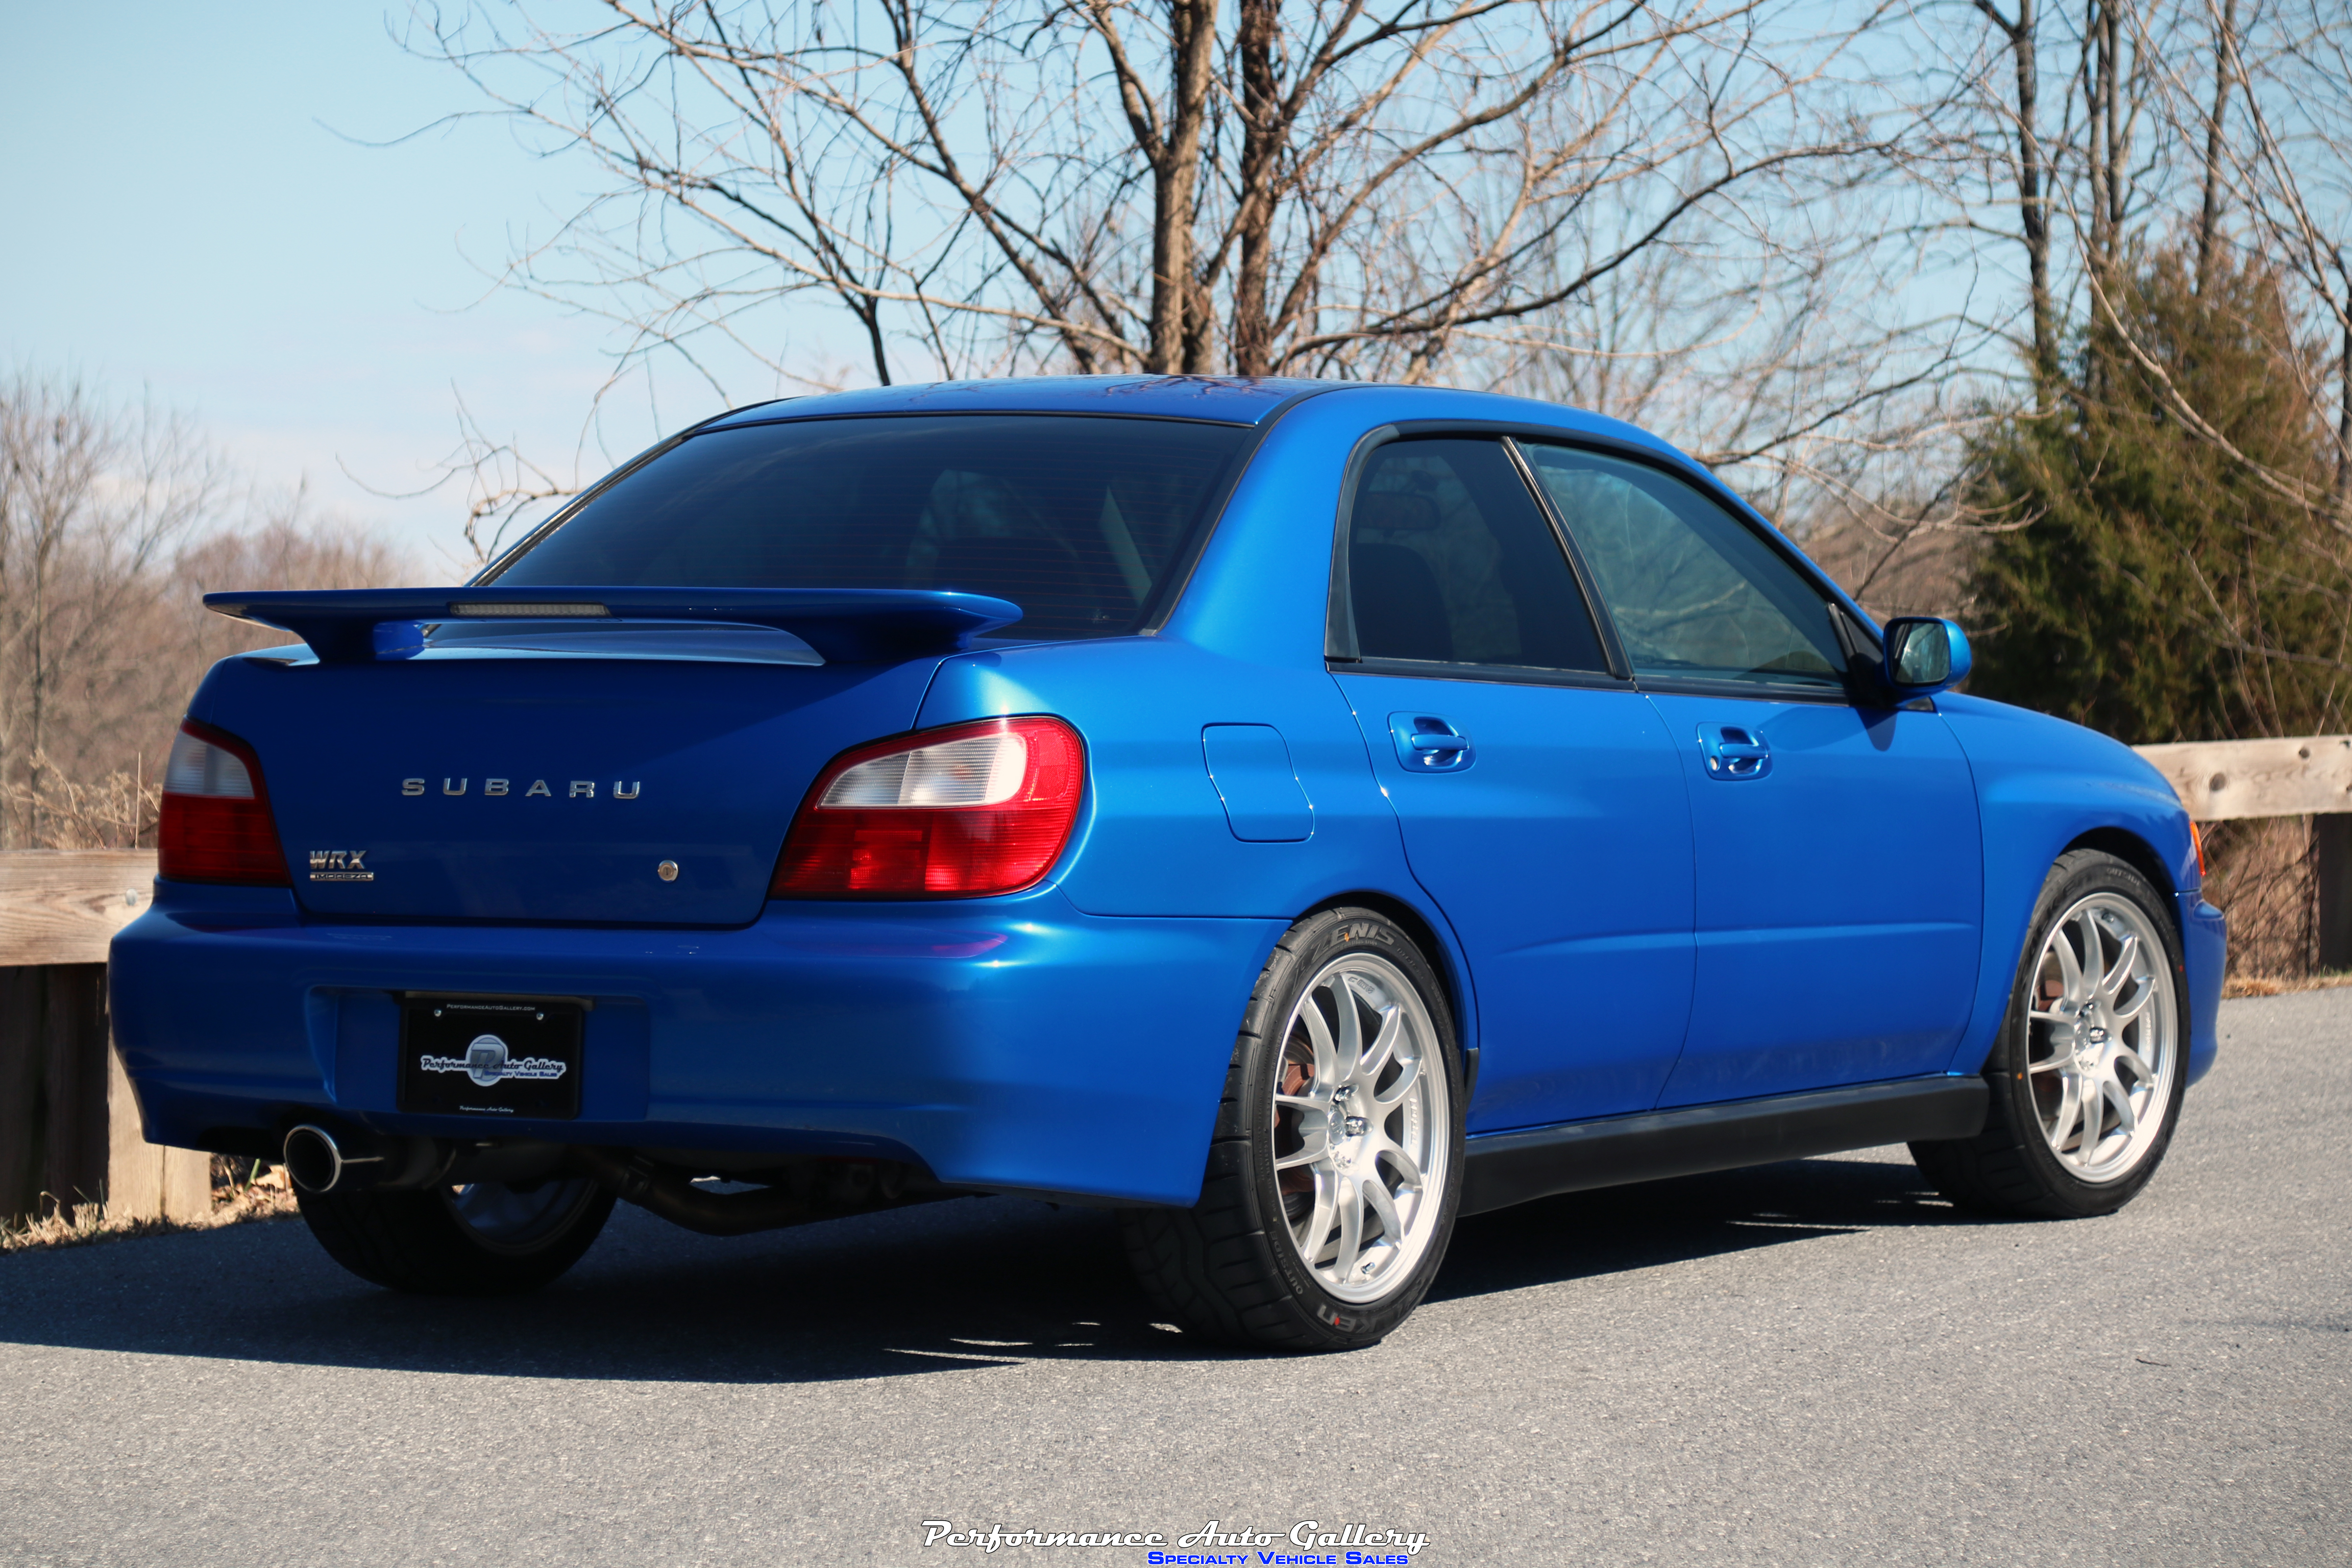 Subaru Impreza Sedan exterior specifications